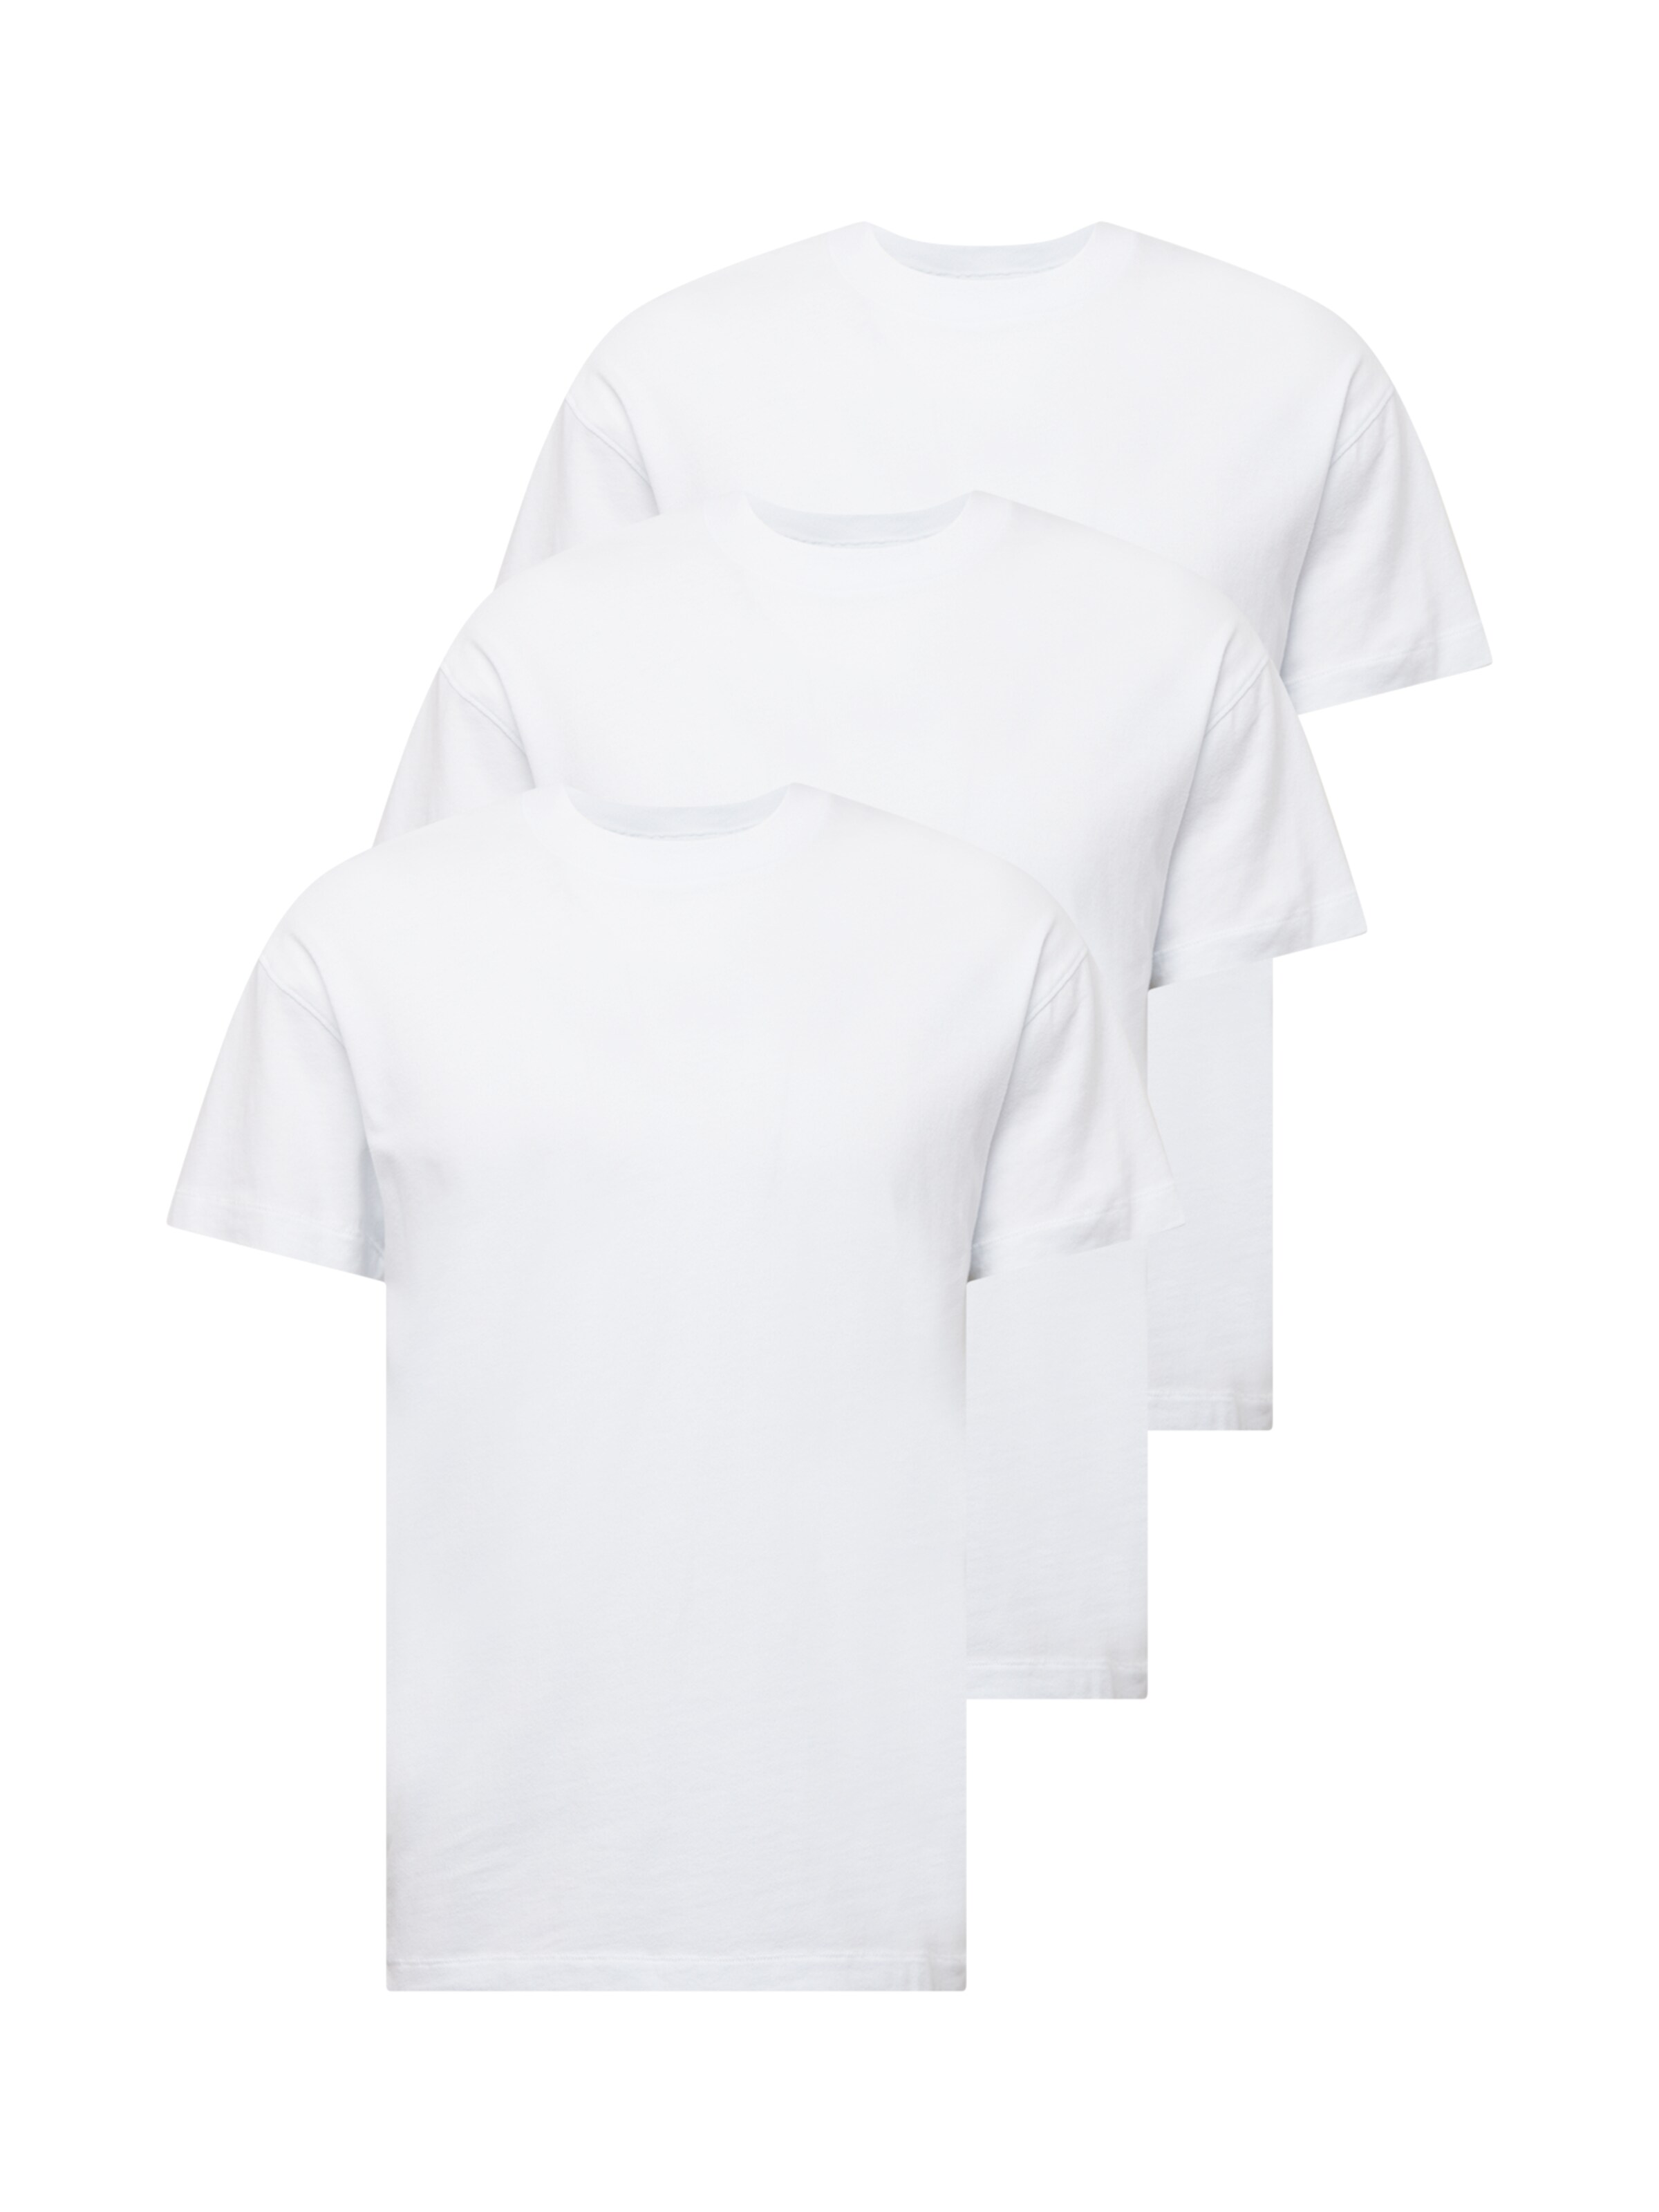 Männer Shirts Abercrombie & Fitch T-Shirt in Weiß - CX44914